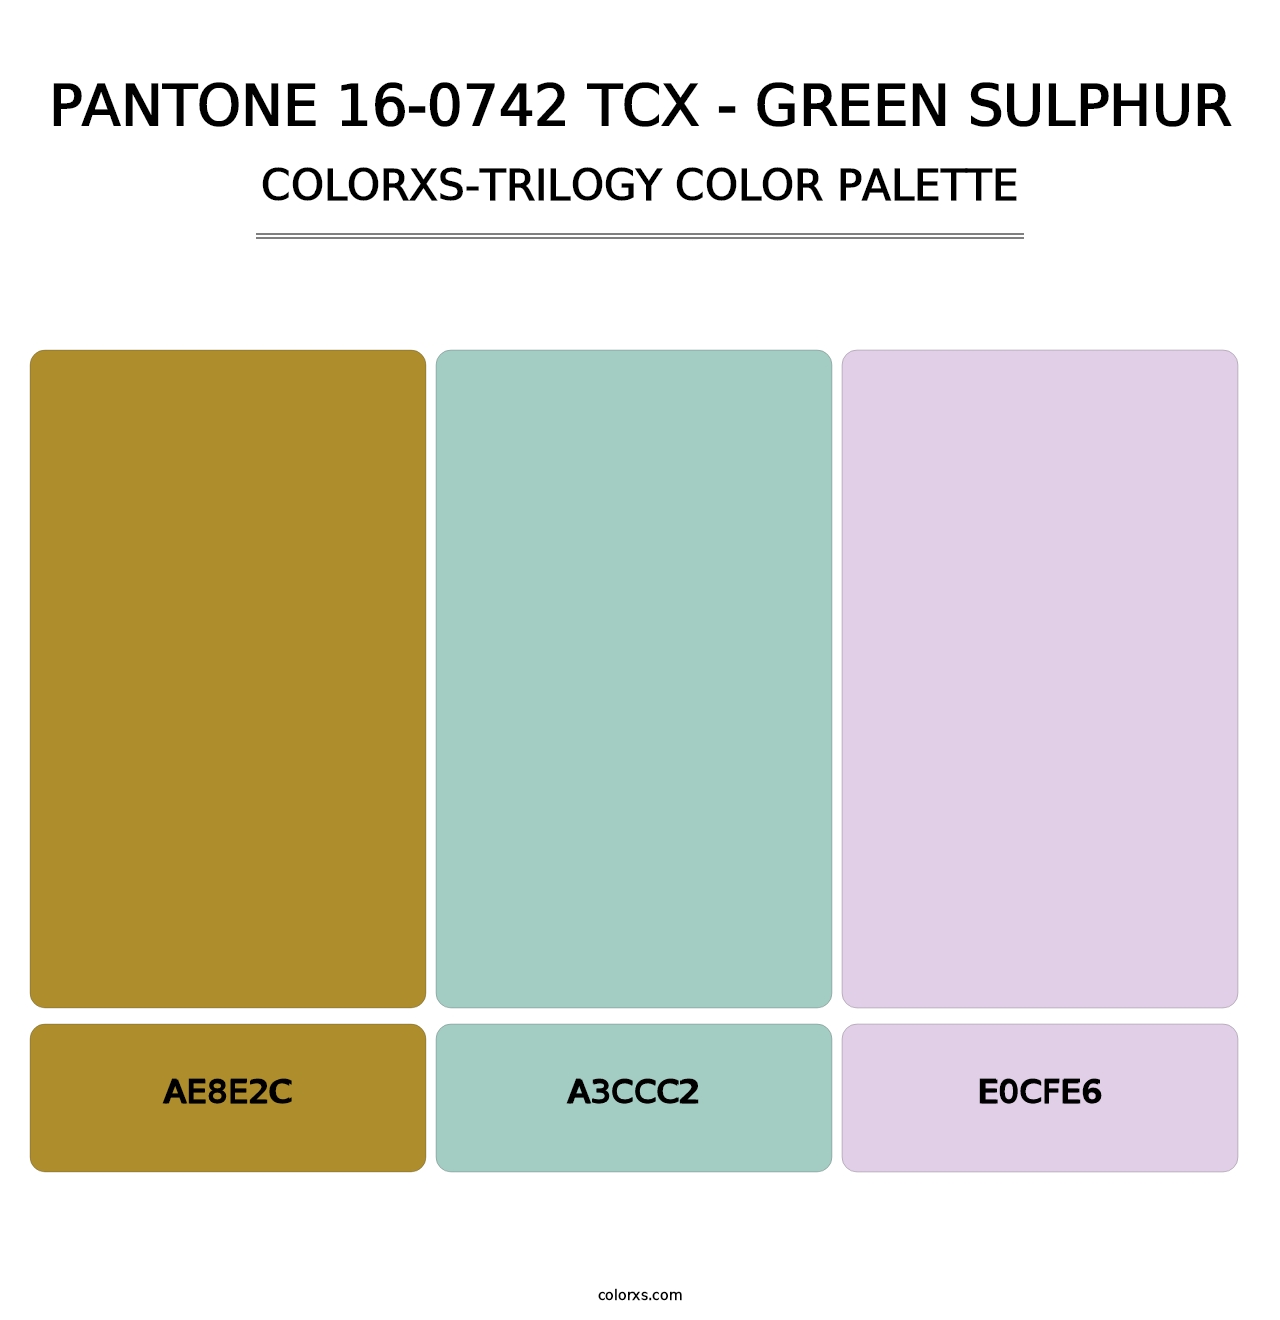 PANTONE 16-0742 TCX - Green Sulphur - Colorxs Trilogy Palette